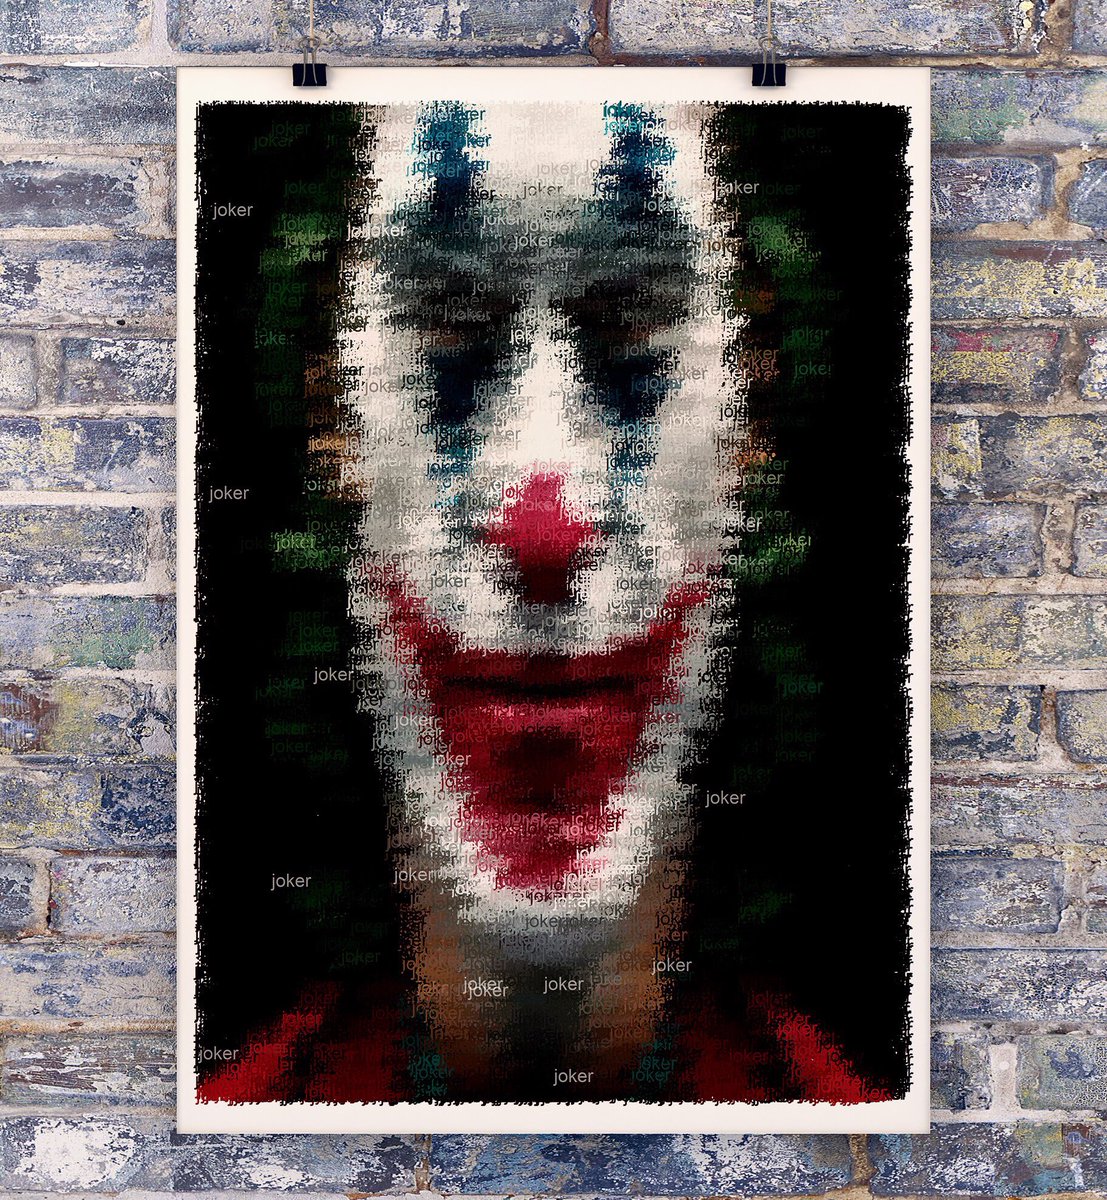 Generando imagen a partir de texto. Turno para el Joker #dataposter #dataviz